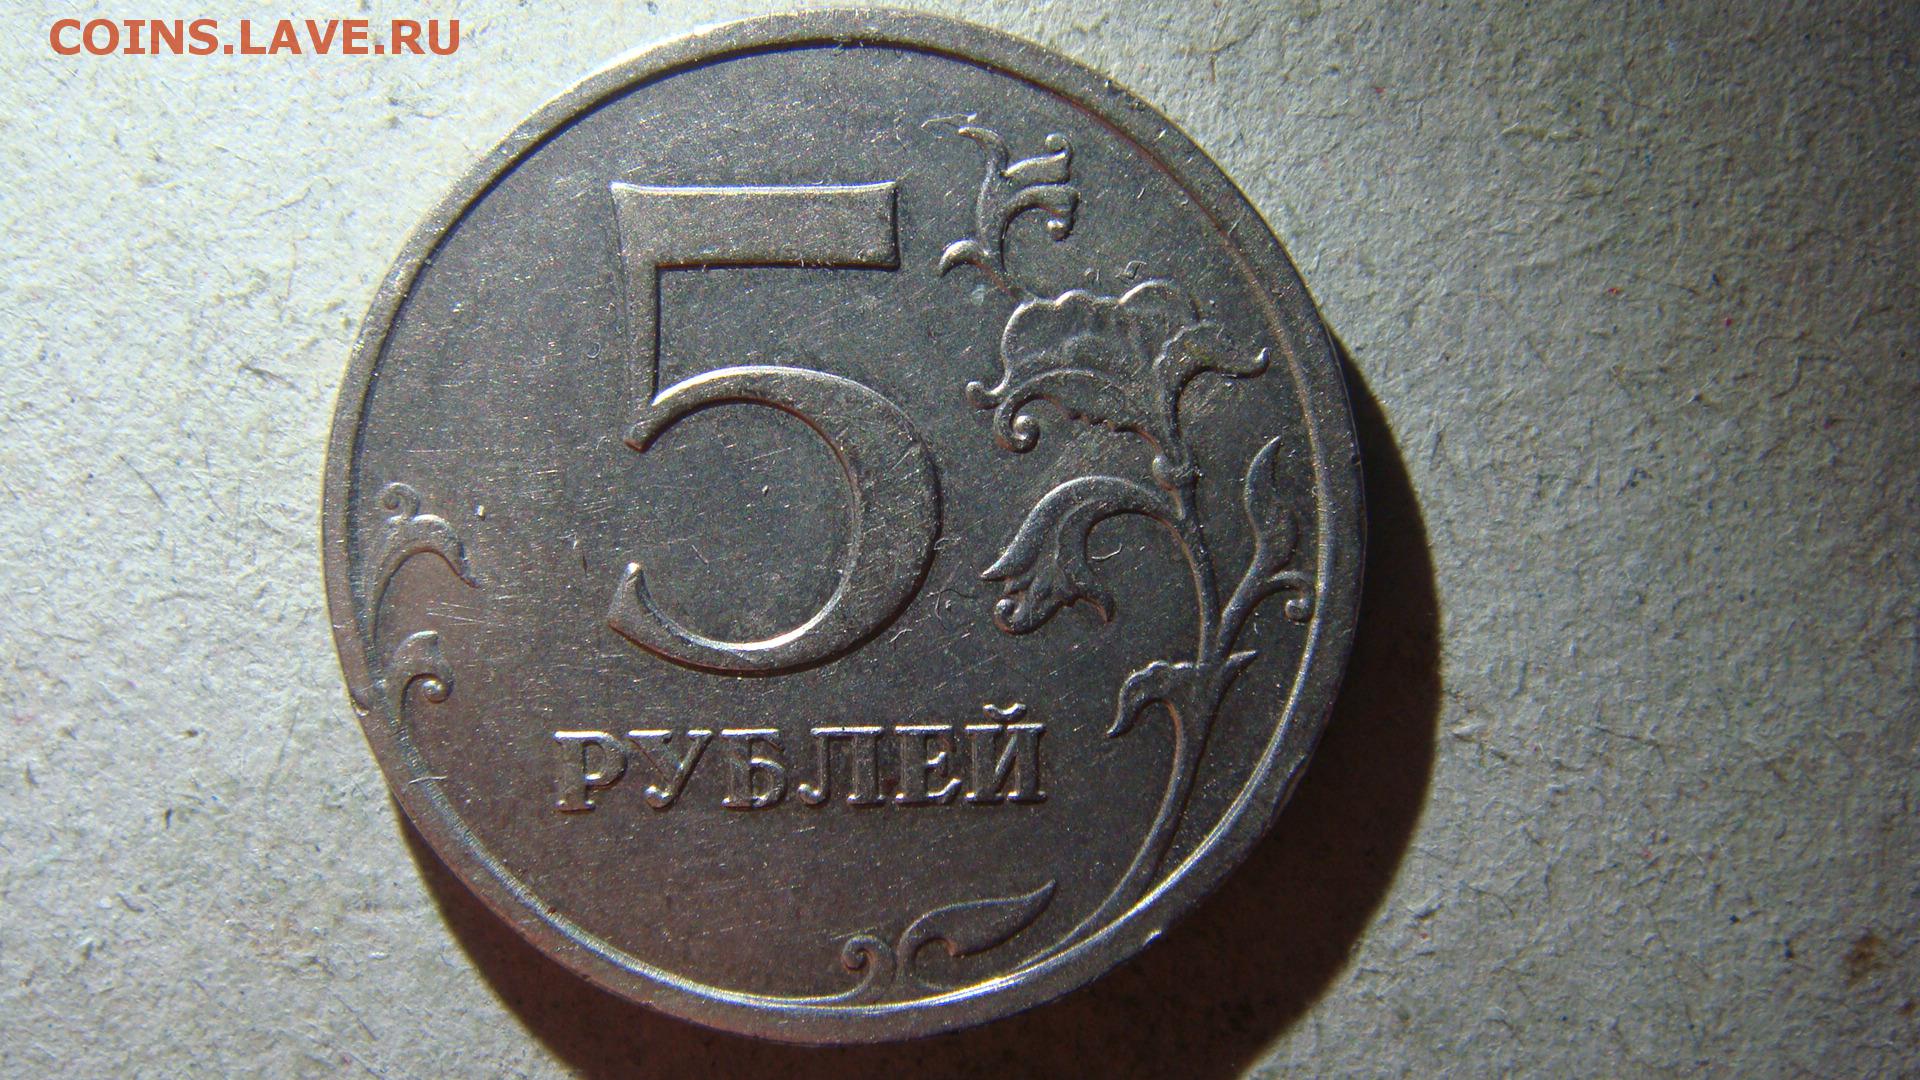 5 14 в рублях. 5 Рублей 1998 года ММД. Монета 5 рублей 1998 года. 5 Рублей 1998 года. 5 Руб 1998/год ММД.